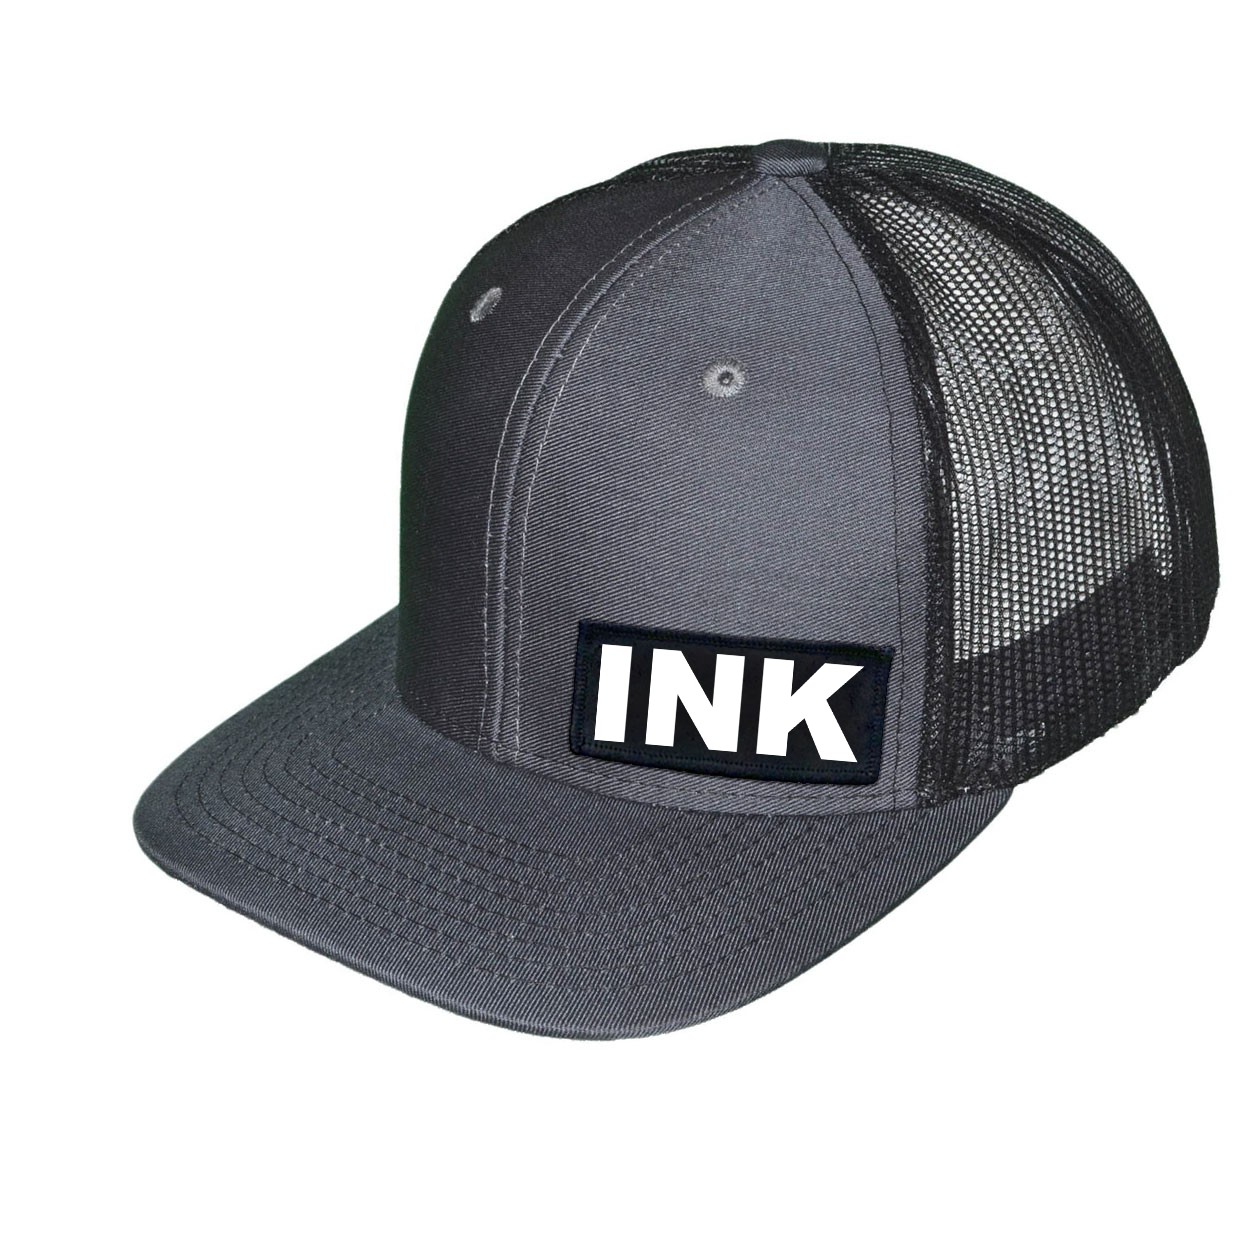 Ink Brand Logo Night Out Woven Patch Snapback Trucker Hat Dark Gray/Black (White Logo)